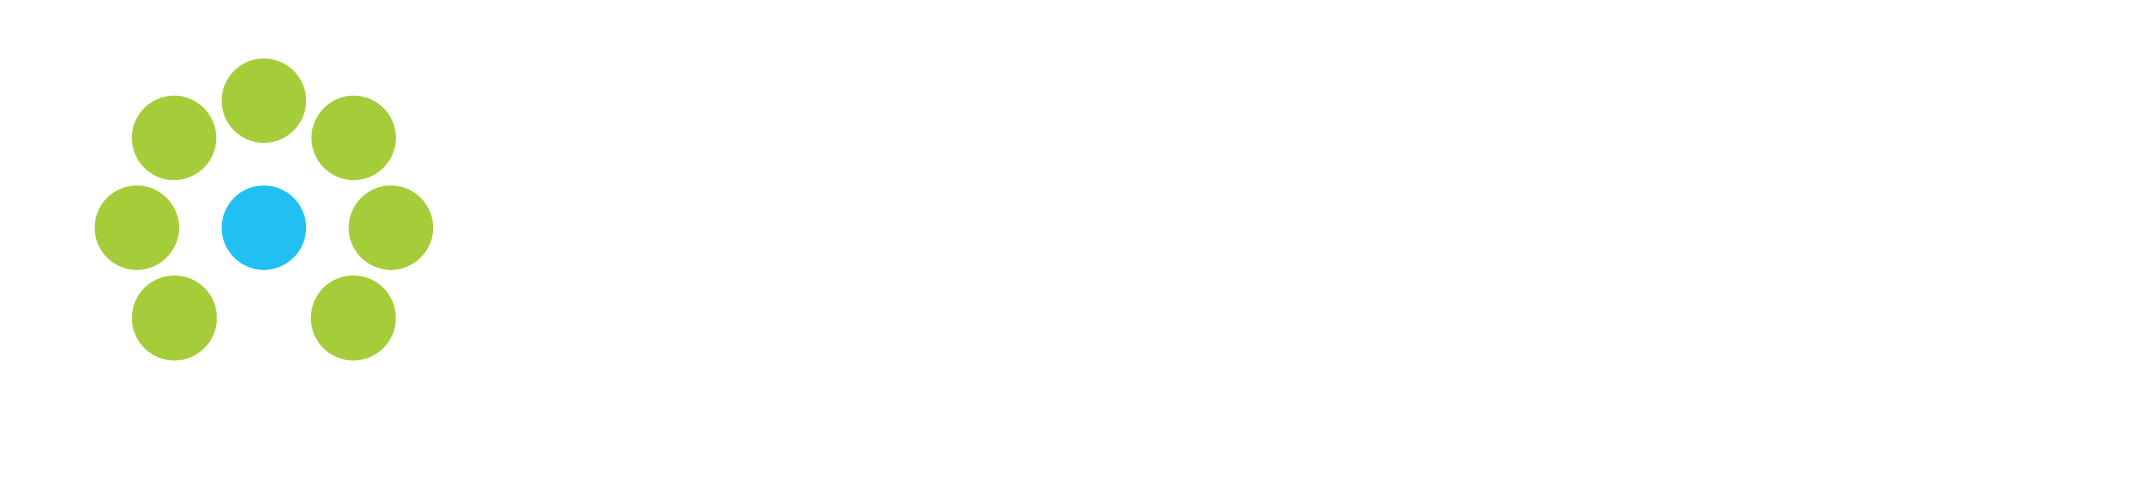 Vancouver School of Interpreting and Translation